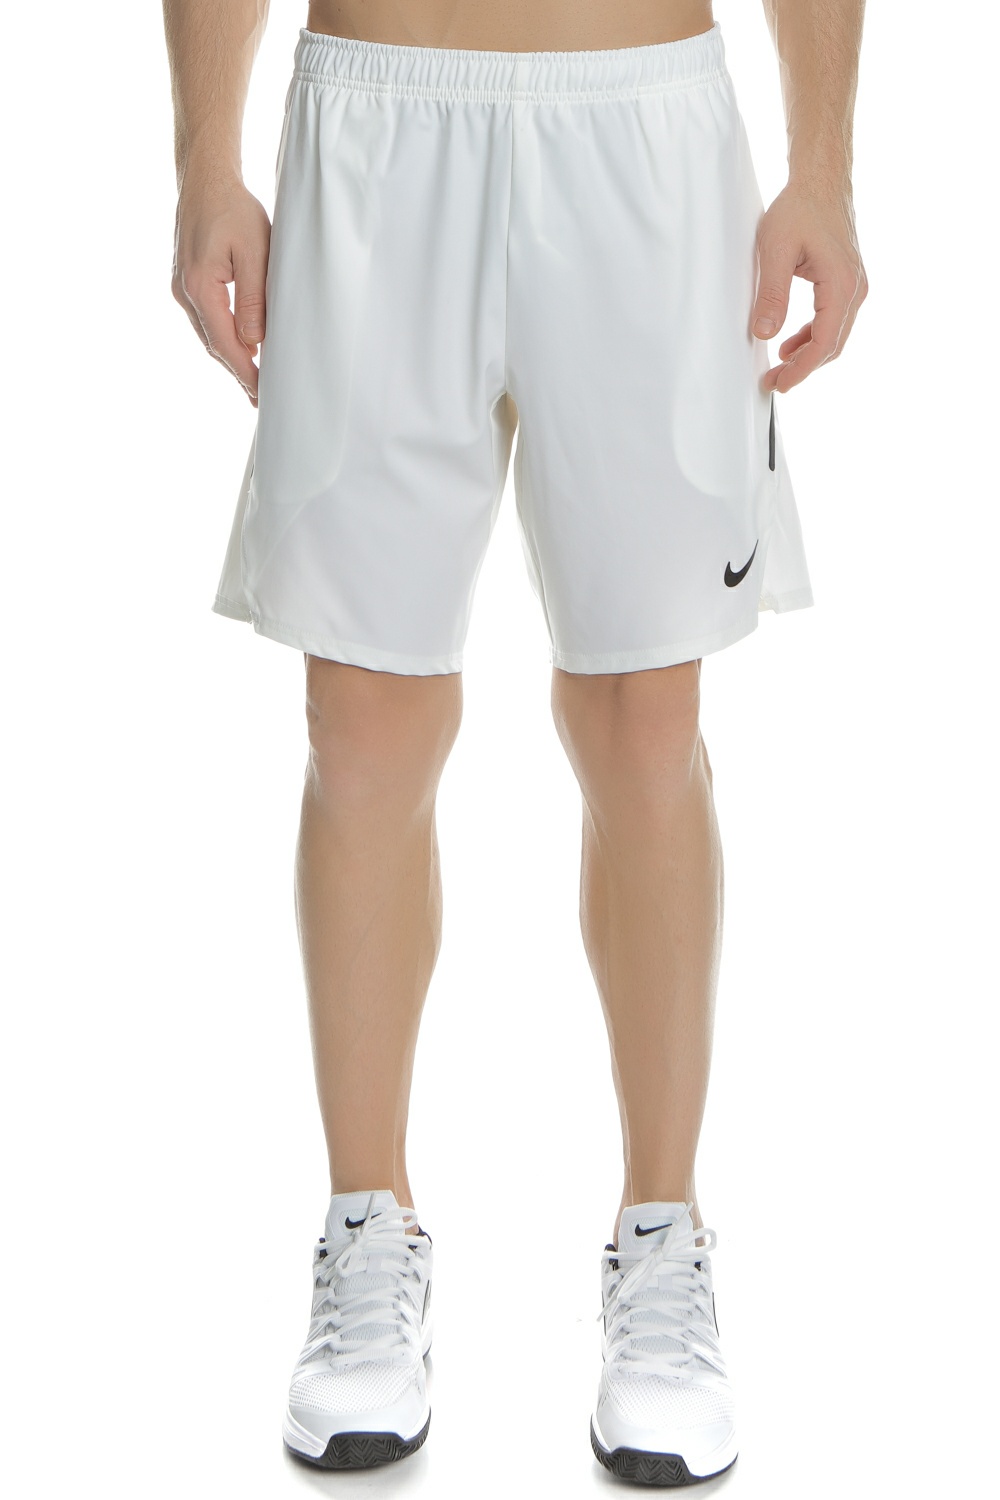 NIKE - Ανδρικό σορτς τένις NIKE NKCT FLX ACE SHORT 9IN λευκό Ανδρικά/Ρούχα/Σορτς-Βερμούδες/Αθλητικά